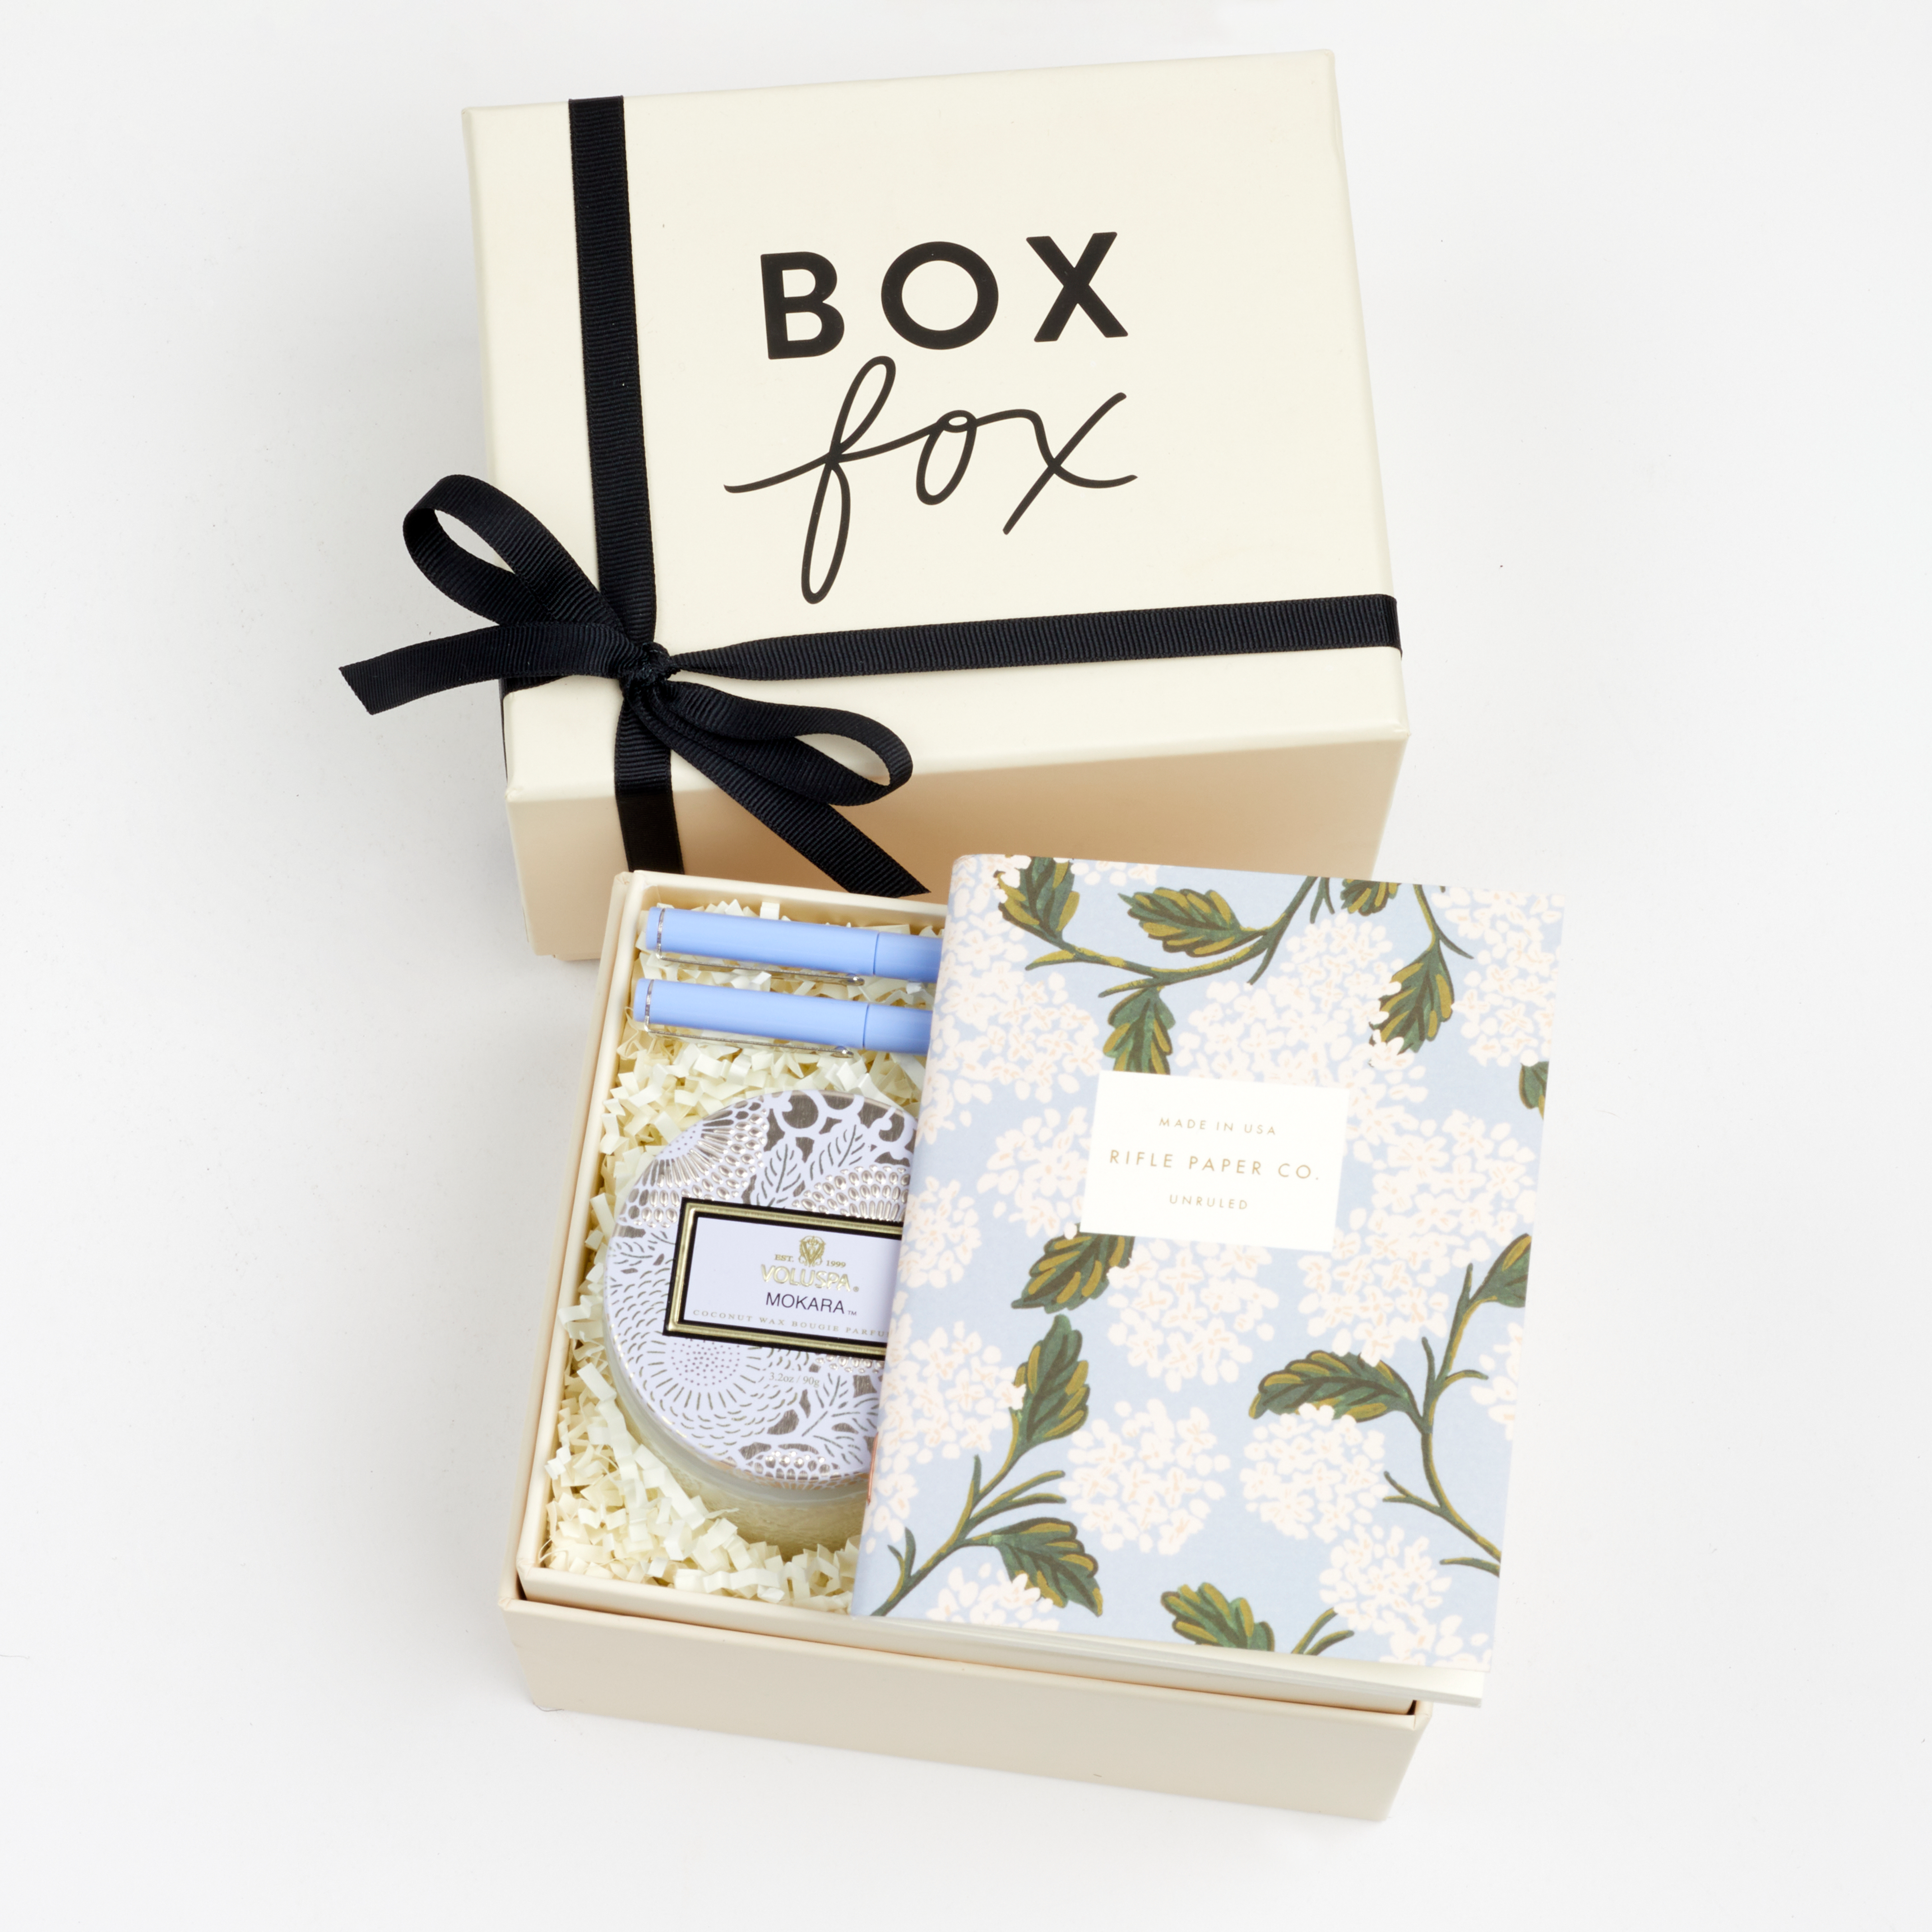 BOXFOX Original Creme Gift Box containing Rifle Paper Hydrangea Pocket Notebooks, 2 Periwinkle Le Pens, and Voluspa Mokara Petite Glass Jar Candle.